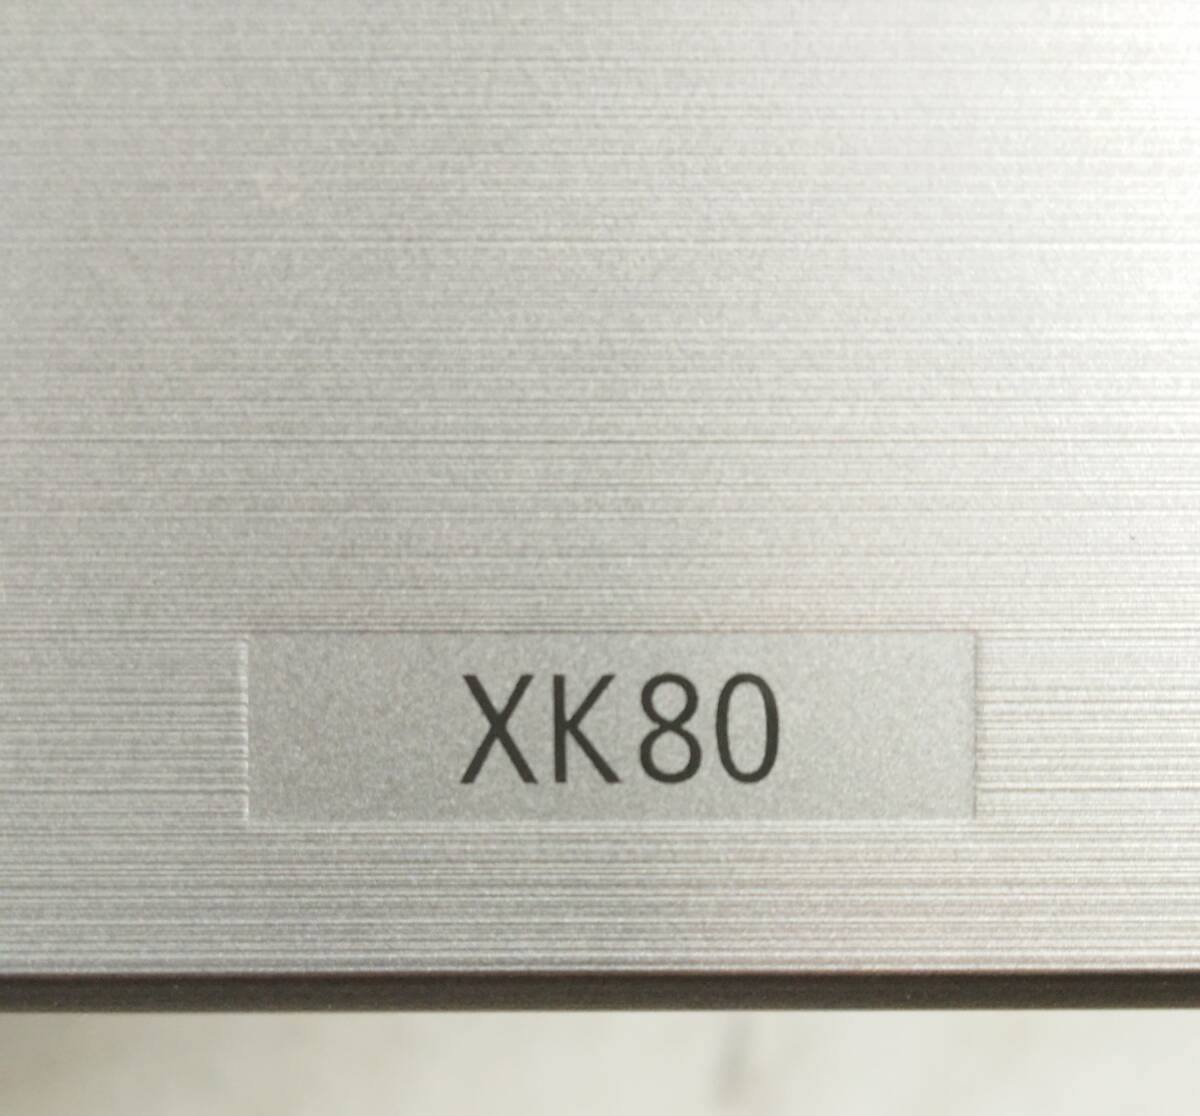 【L181】中古・現状品★Canon キヤノン プリンター 3台まとめて XK90×1台 XK80×2台 ピクサス PIXUS インクジェット 本体 複合機 キャノン_画像5